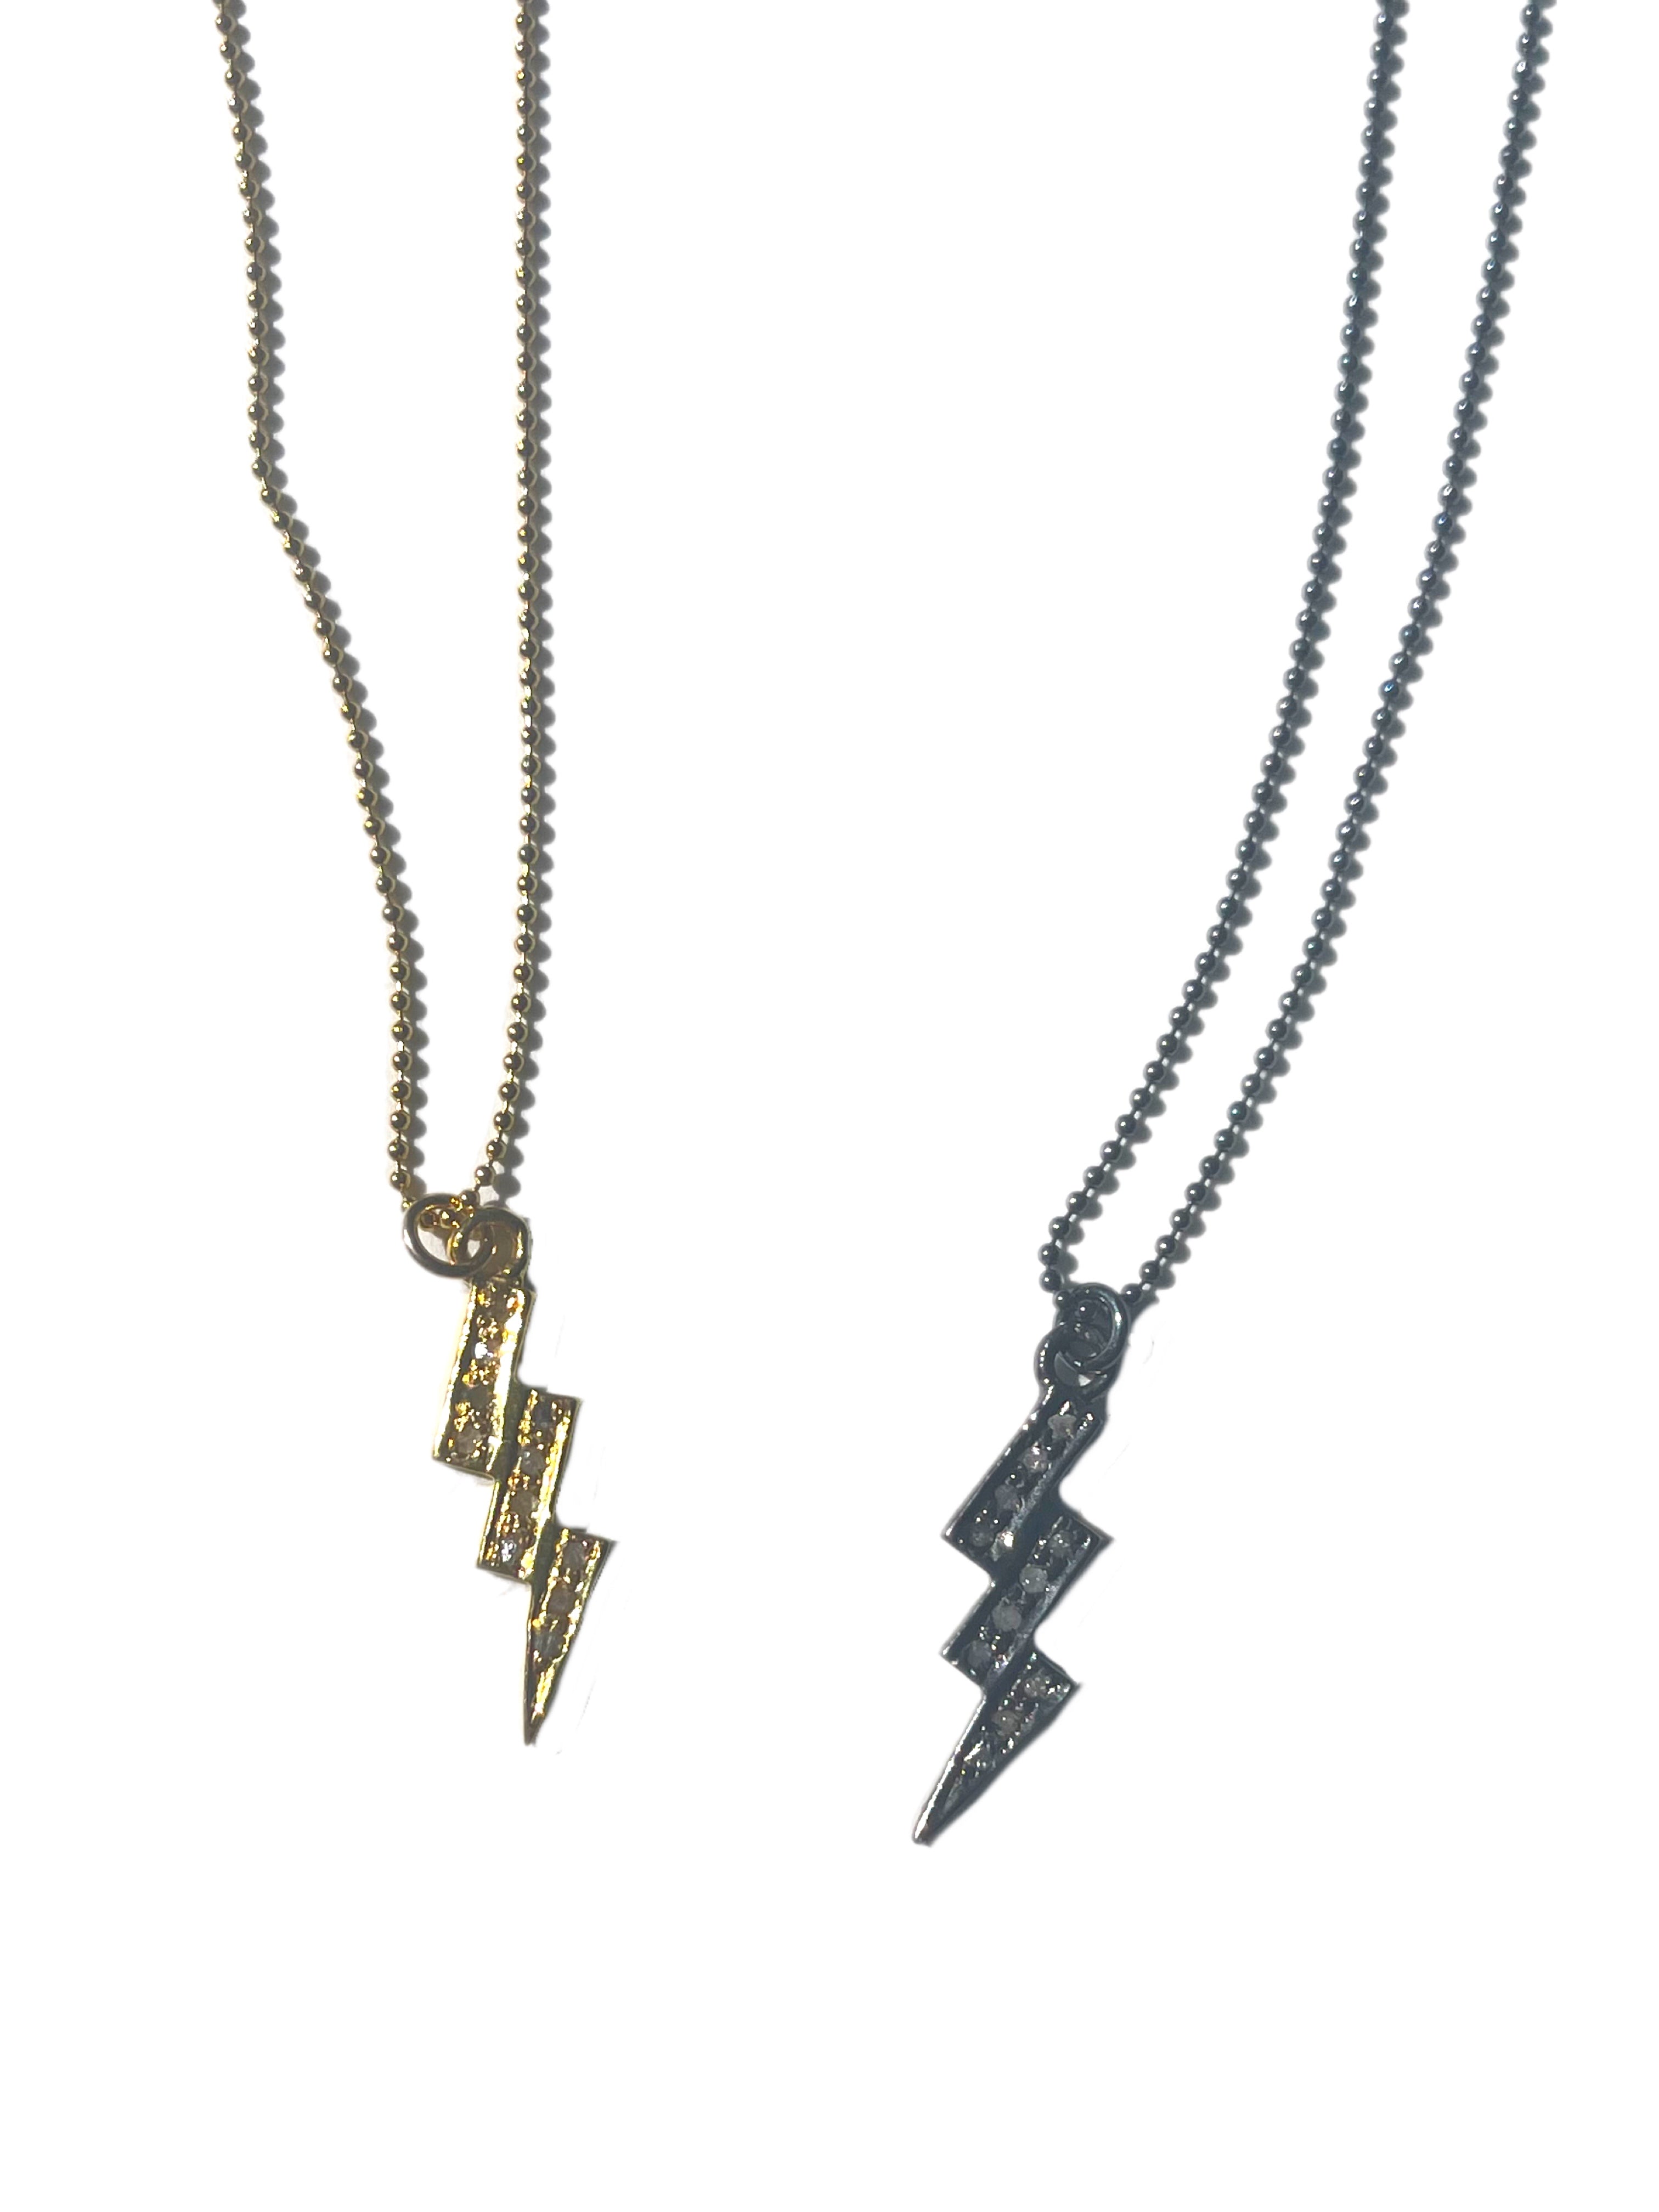 Bolt – necklace with pave diamond bolt pendant